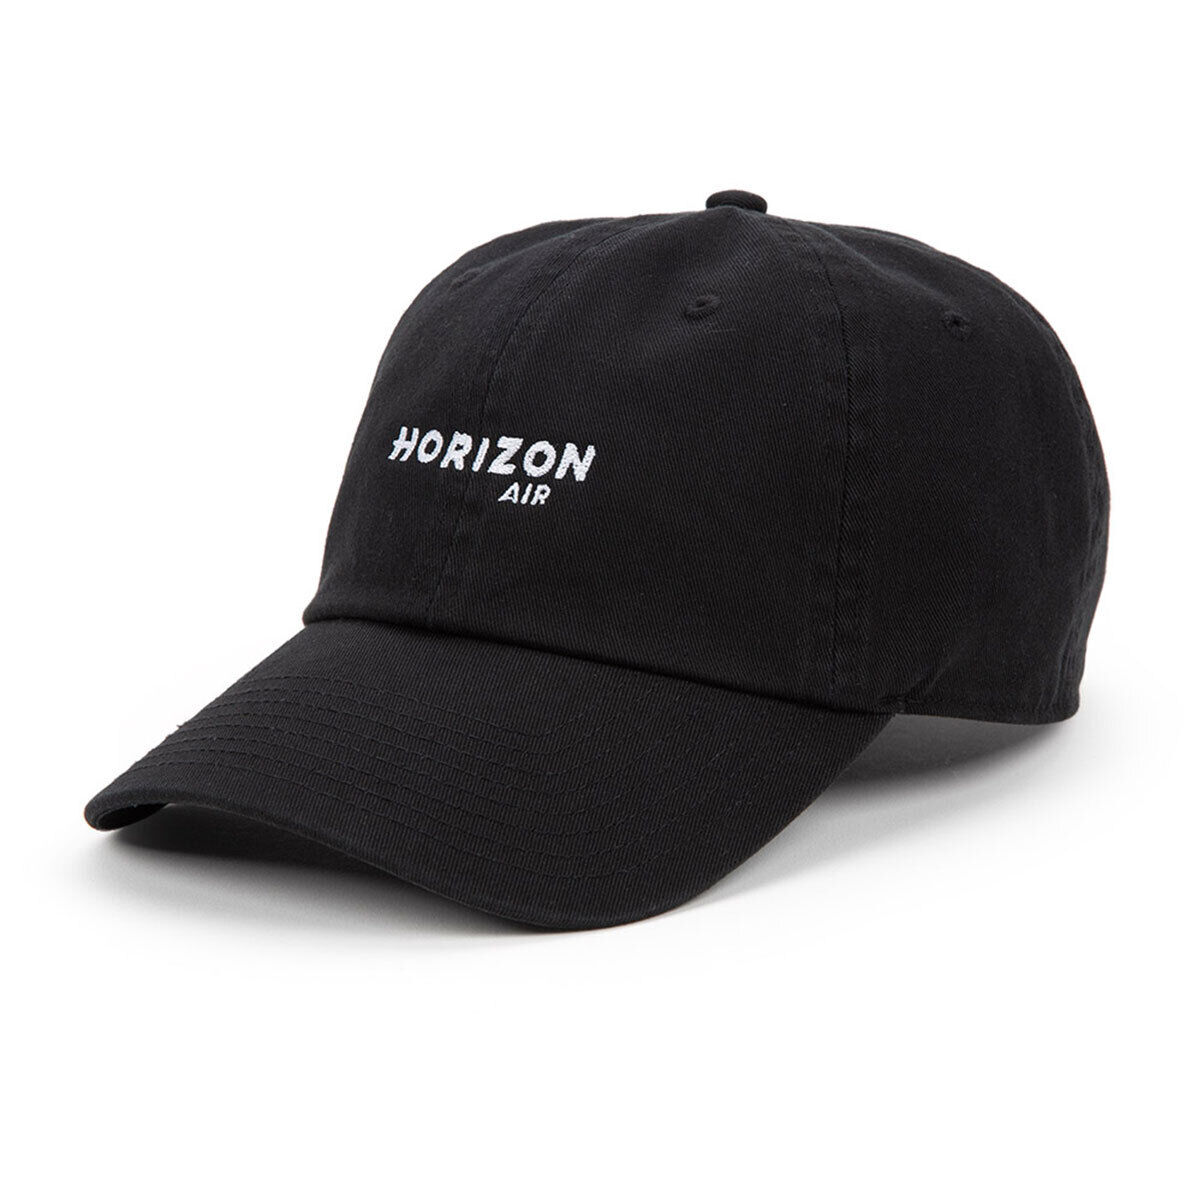 Horizon Air Embroidered Logo Adjustable Pigment Dyed Black Baseball Golf Cap Hat